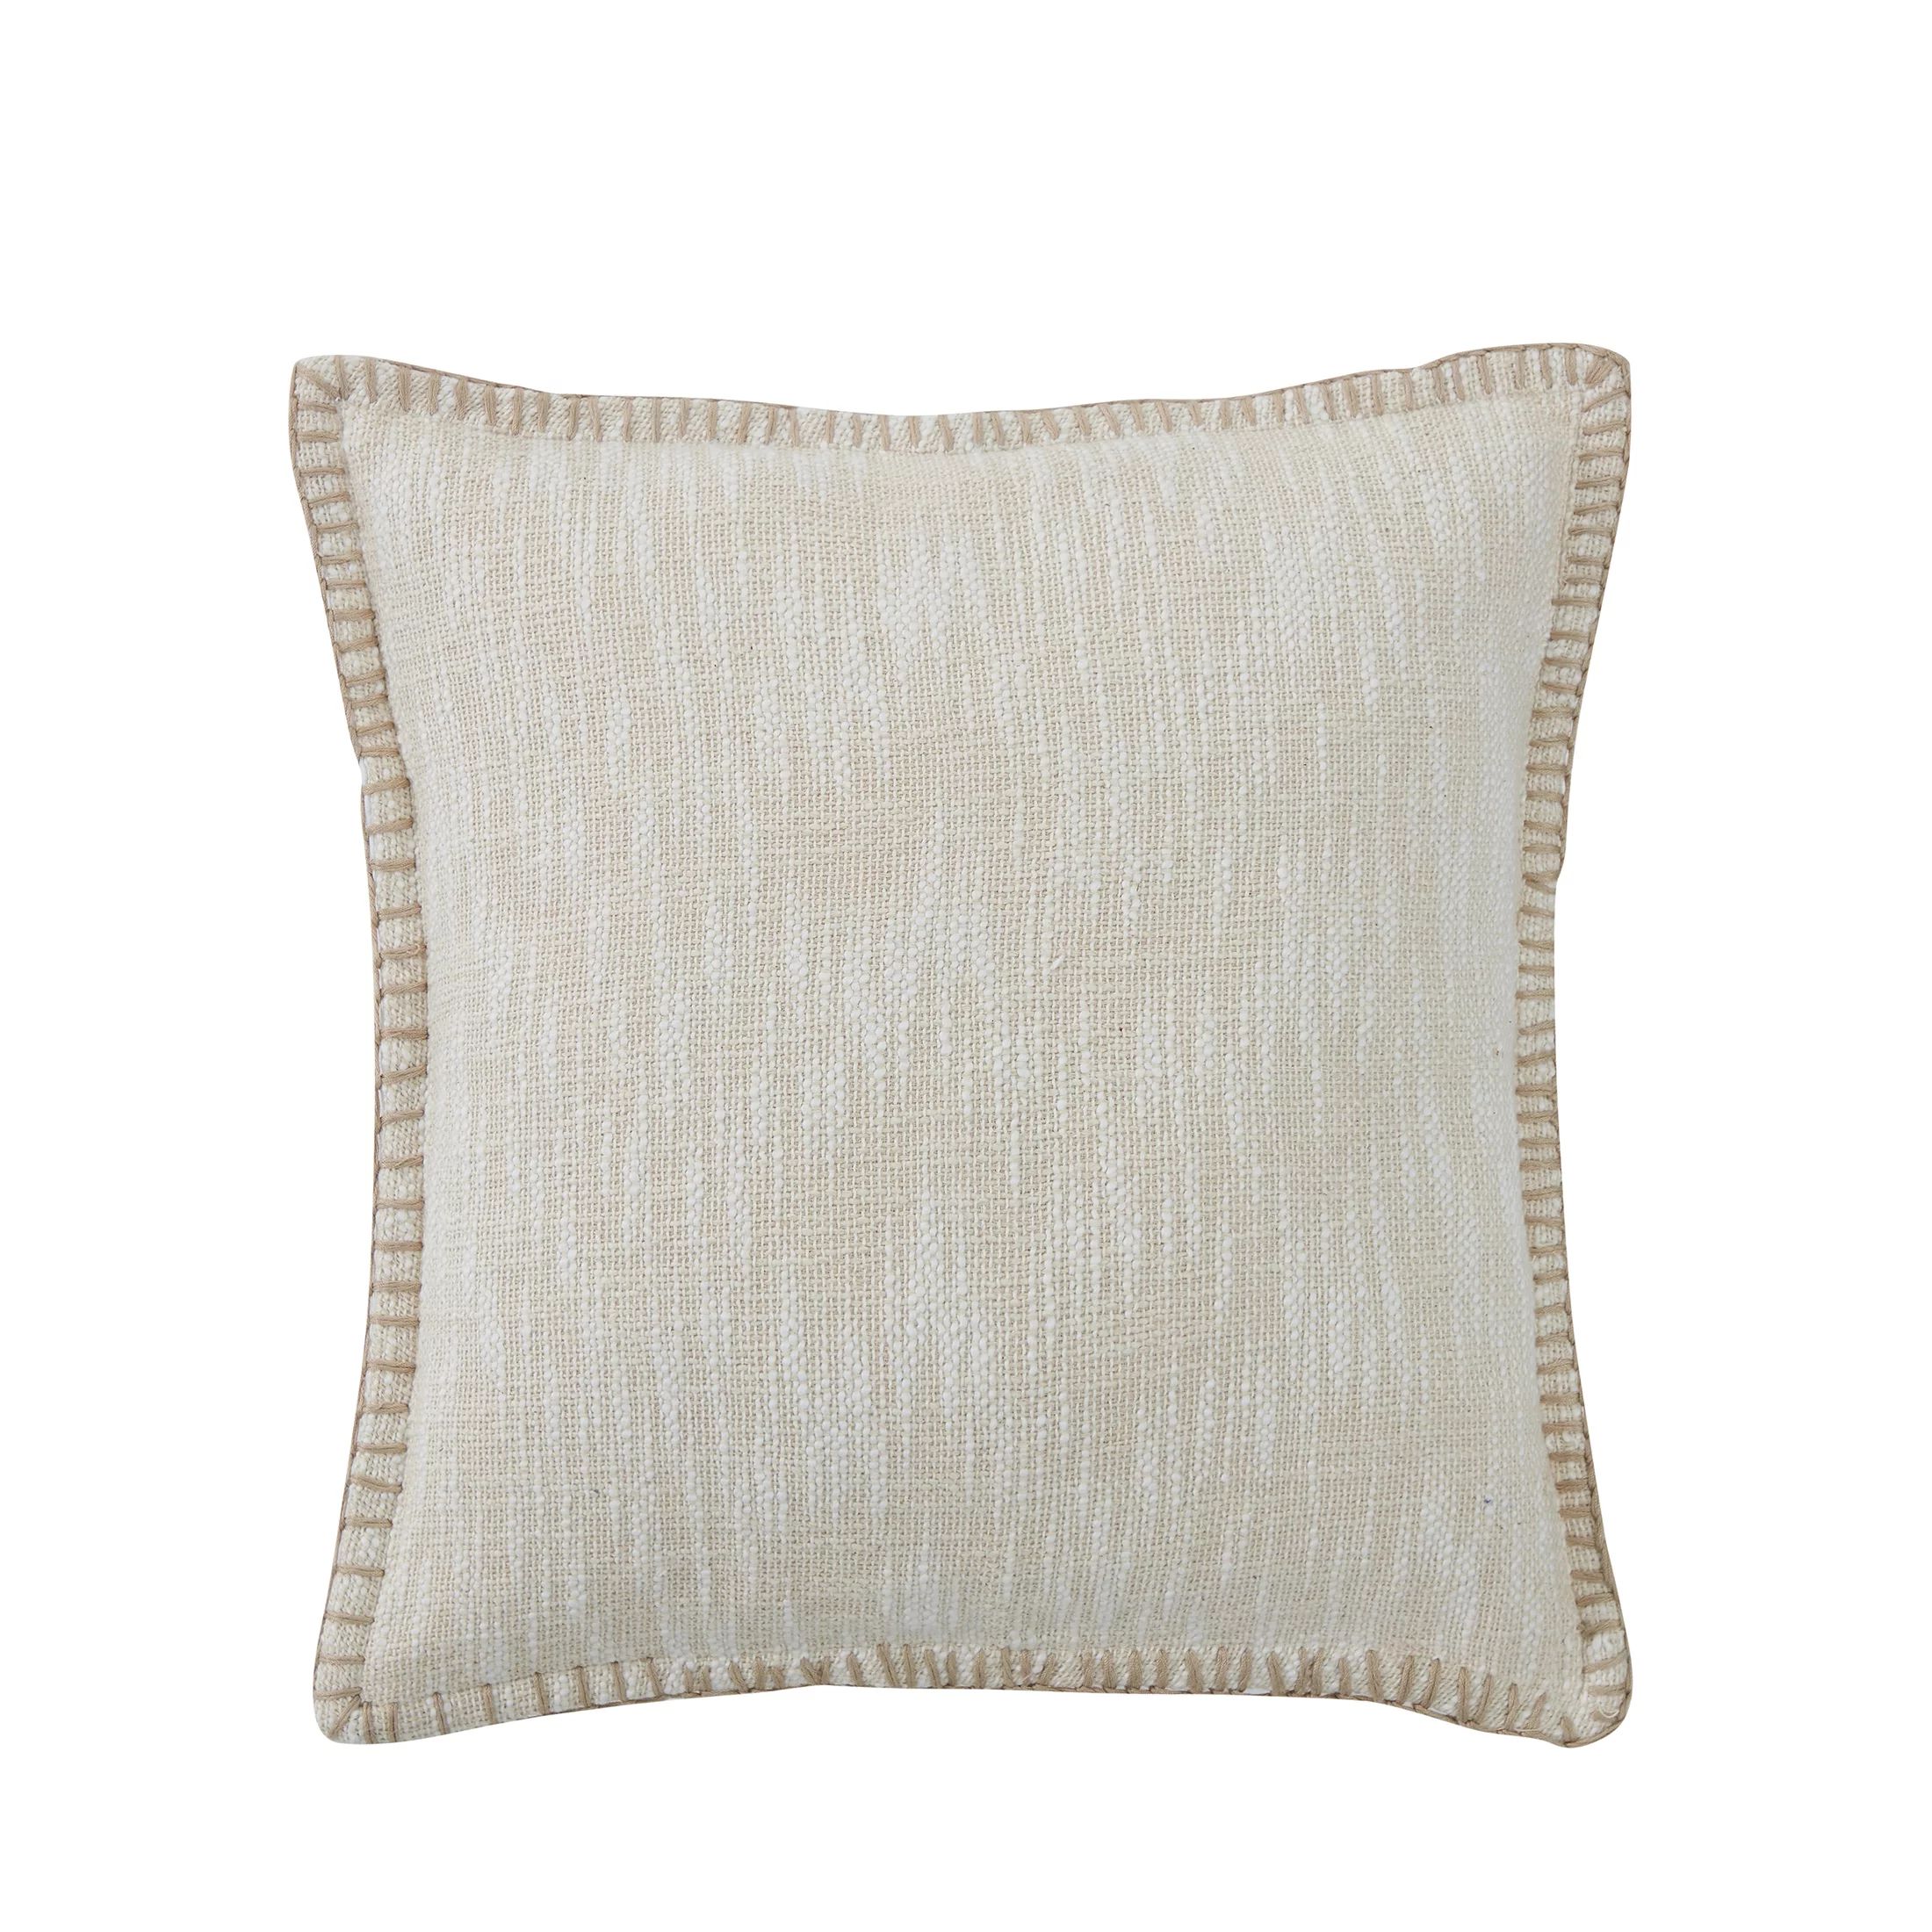 My Texas House Weston Woven Cotton Slub Square Decorative Pillow Cover, 20" x 20", Beige | Walmart (US)